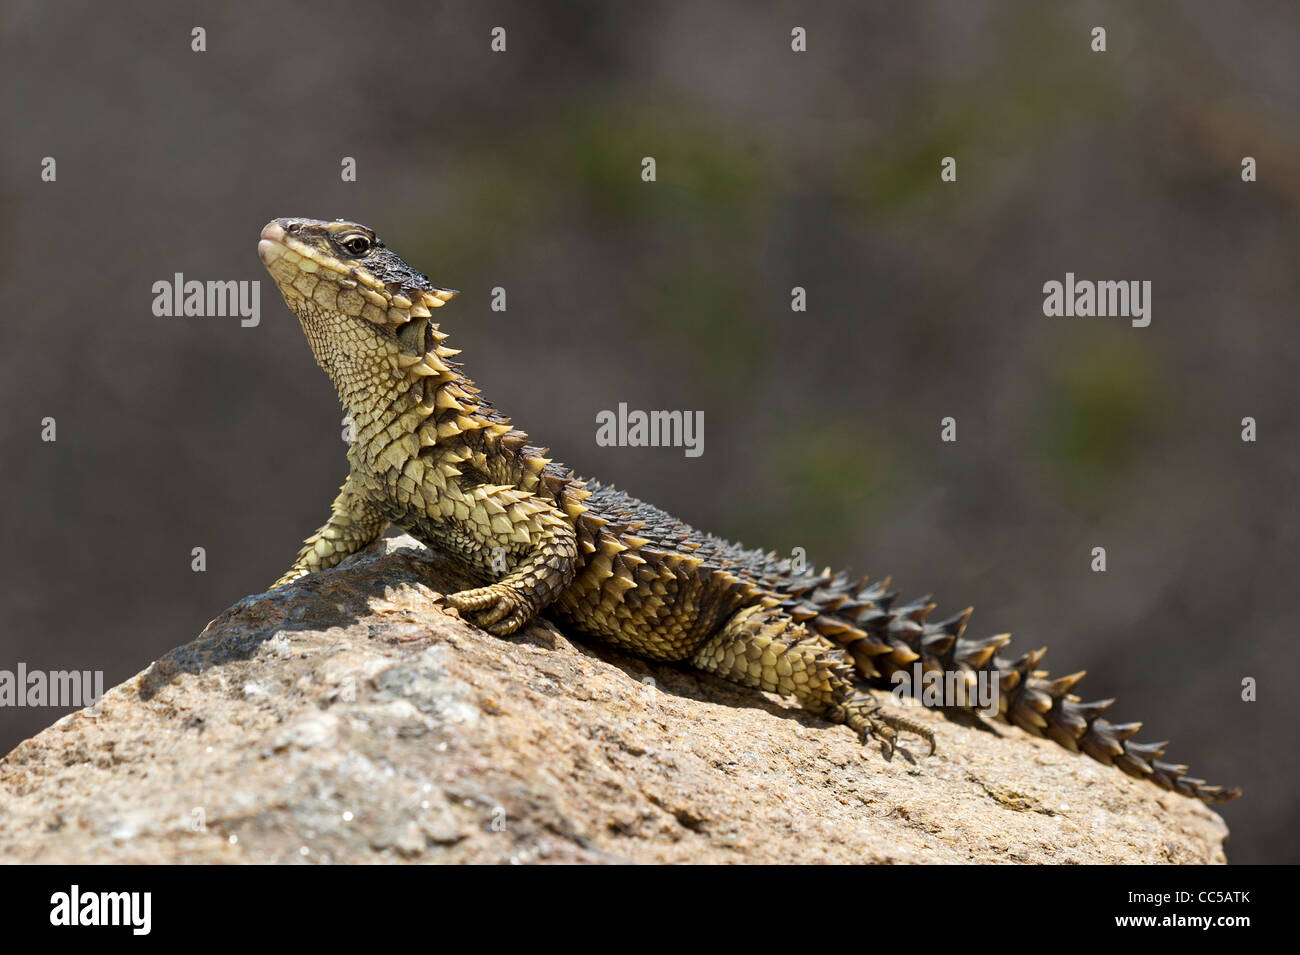 A Sungazer lizard, sun bathing Stock Photo